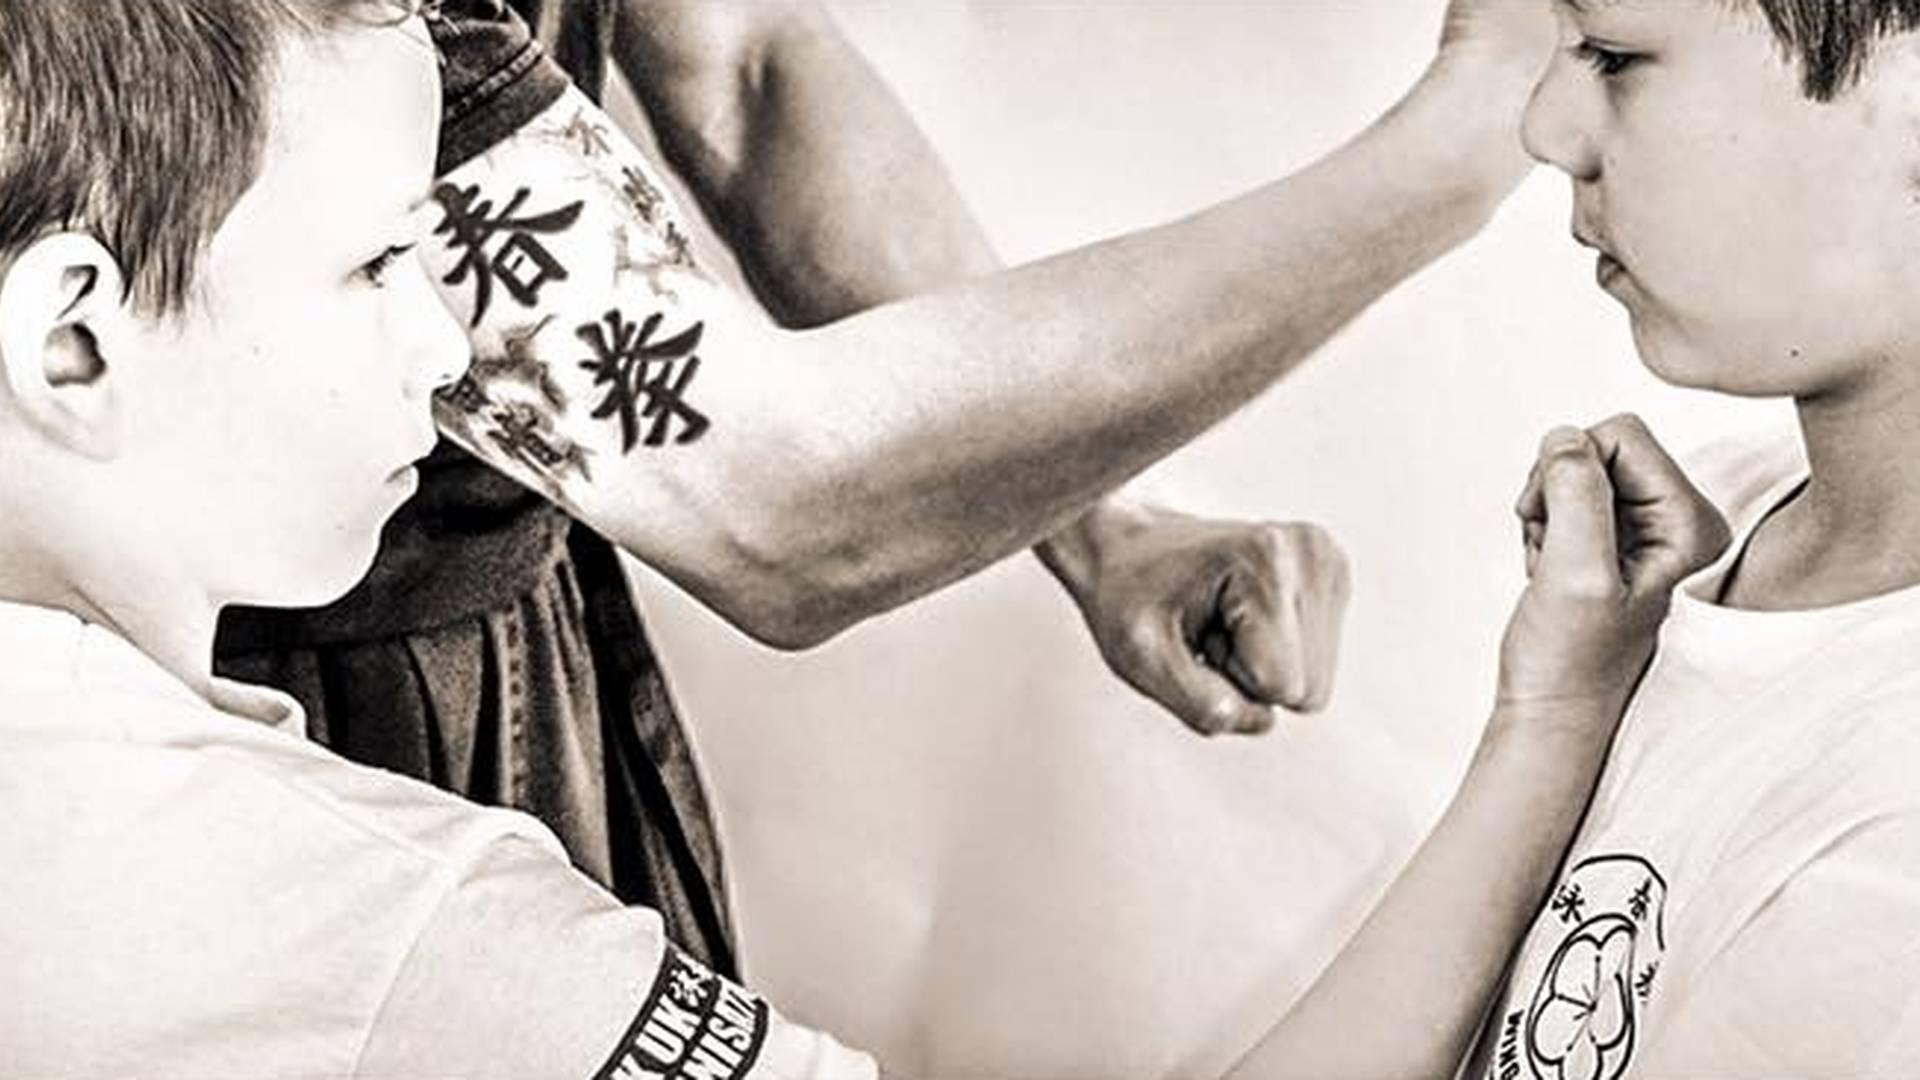 Banstead Wing Chun photo